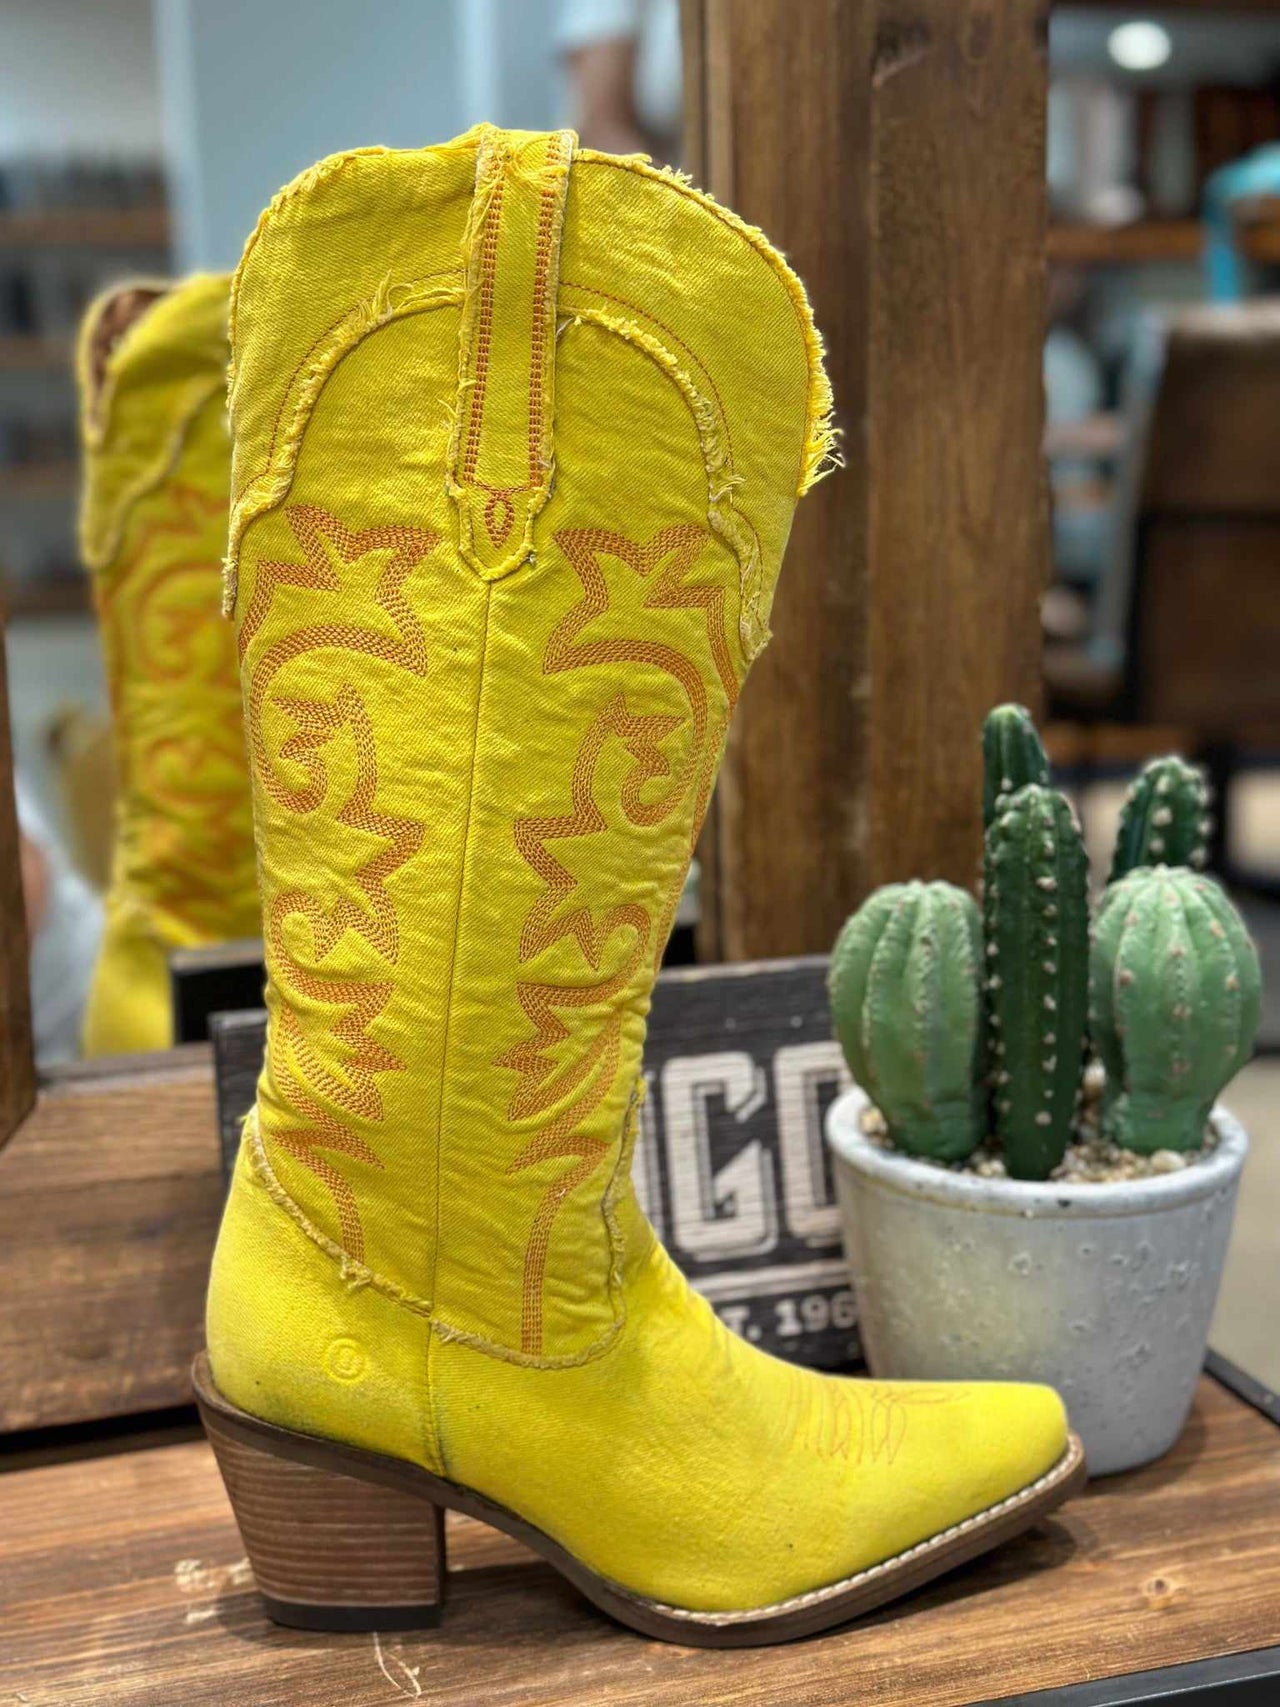 Texas Tornado Denim Boot by Dingo - Yellow